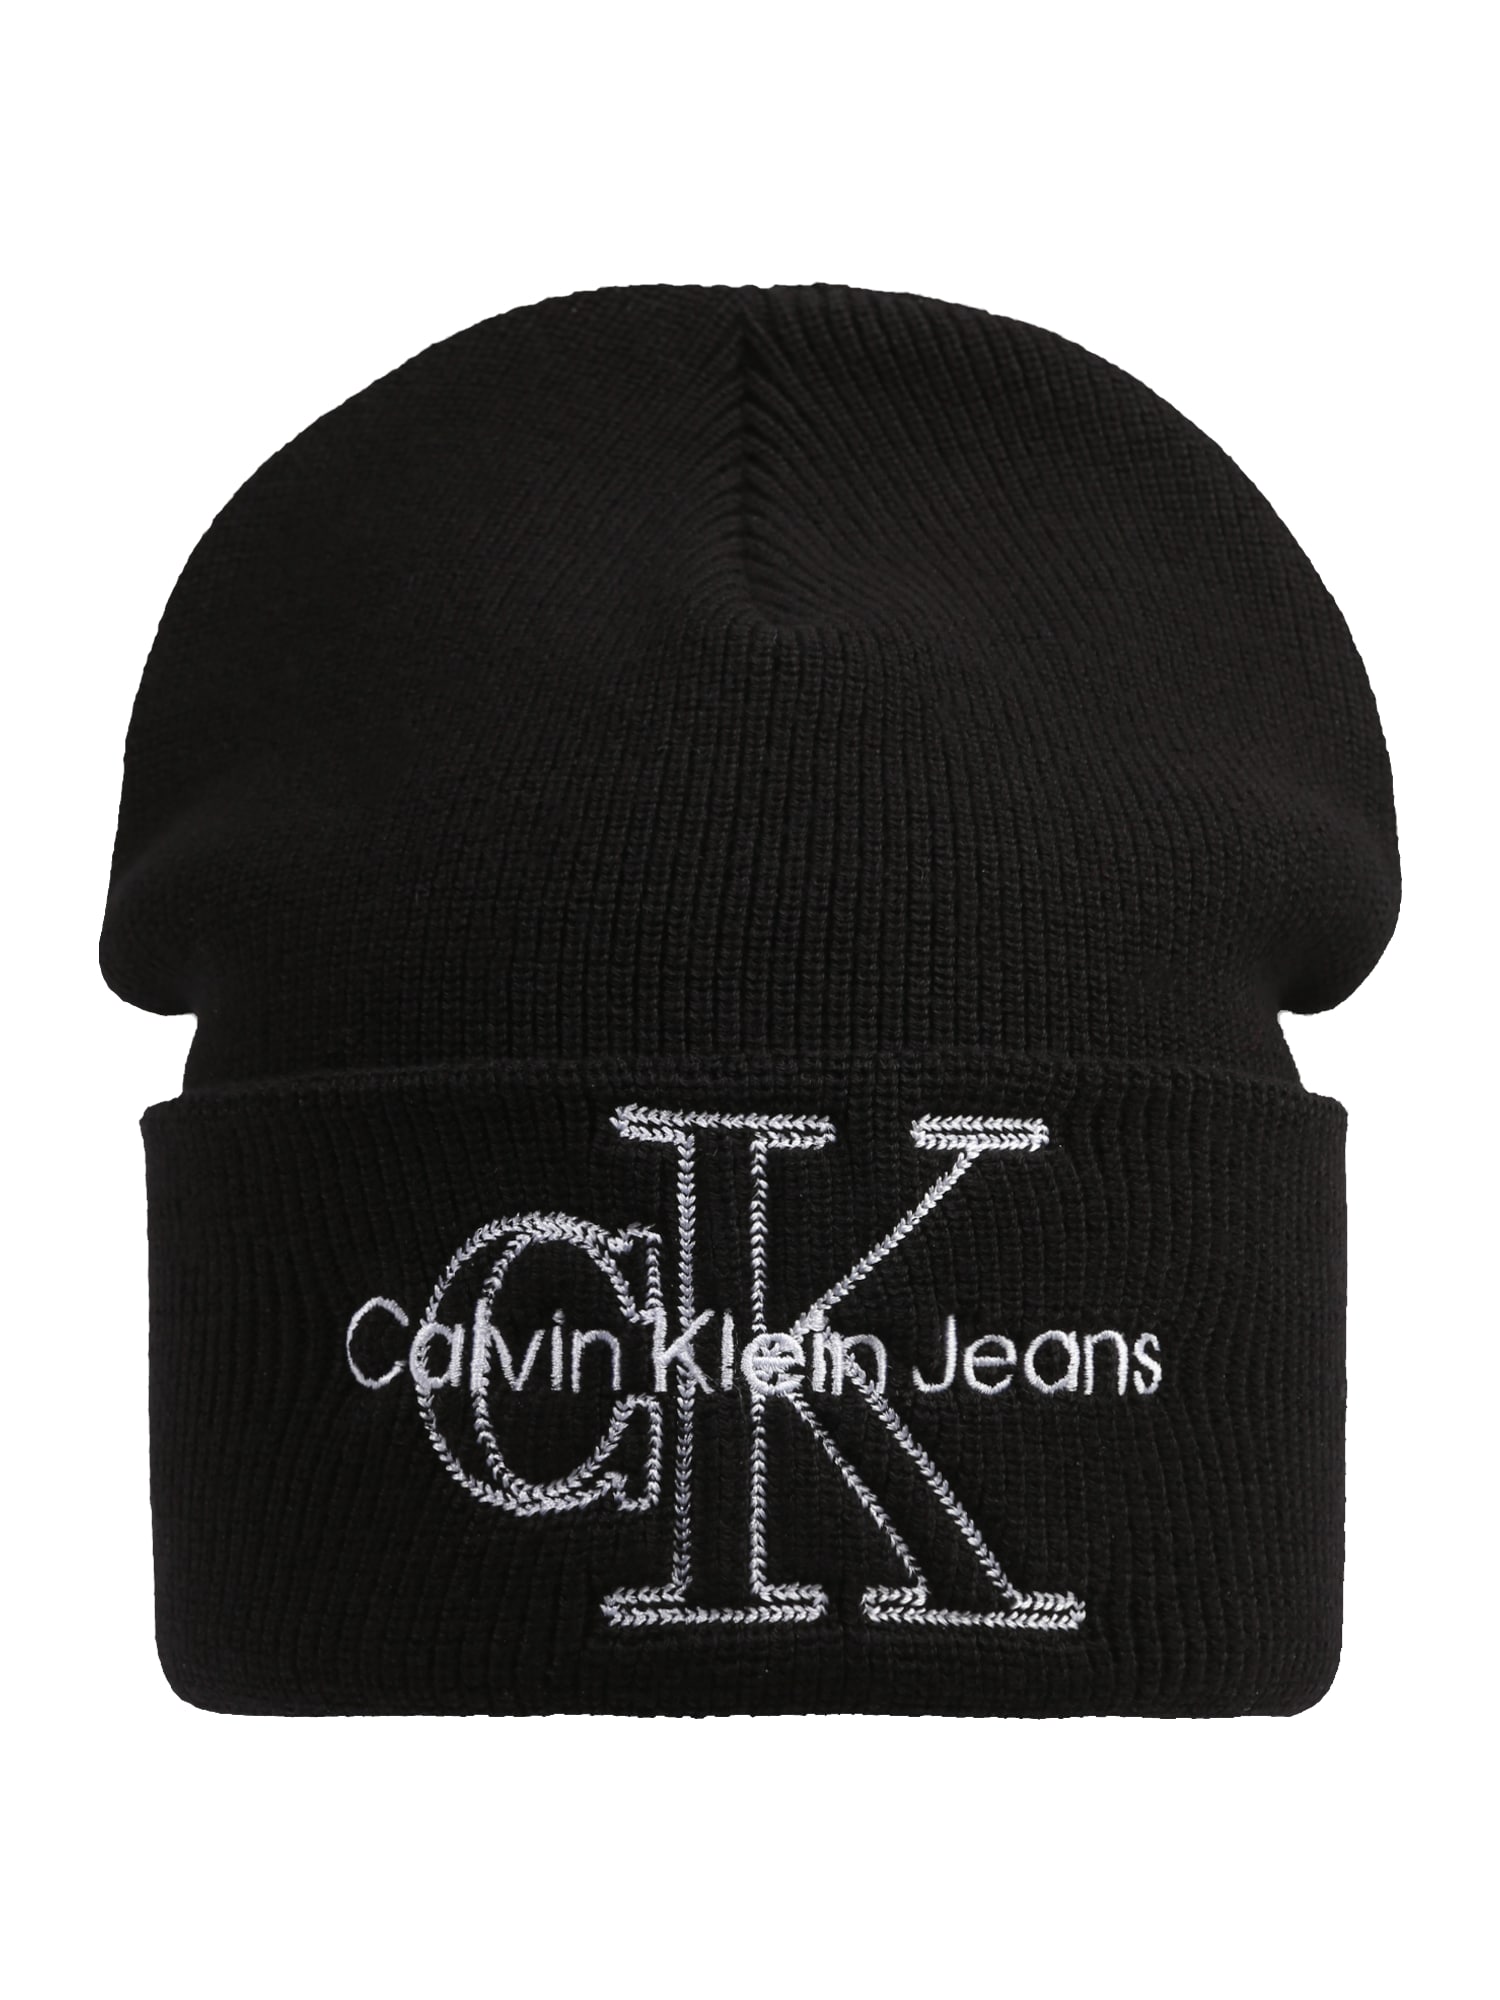 Calvin Klein Jeans Sapka  fekete / fehér